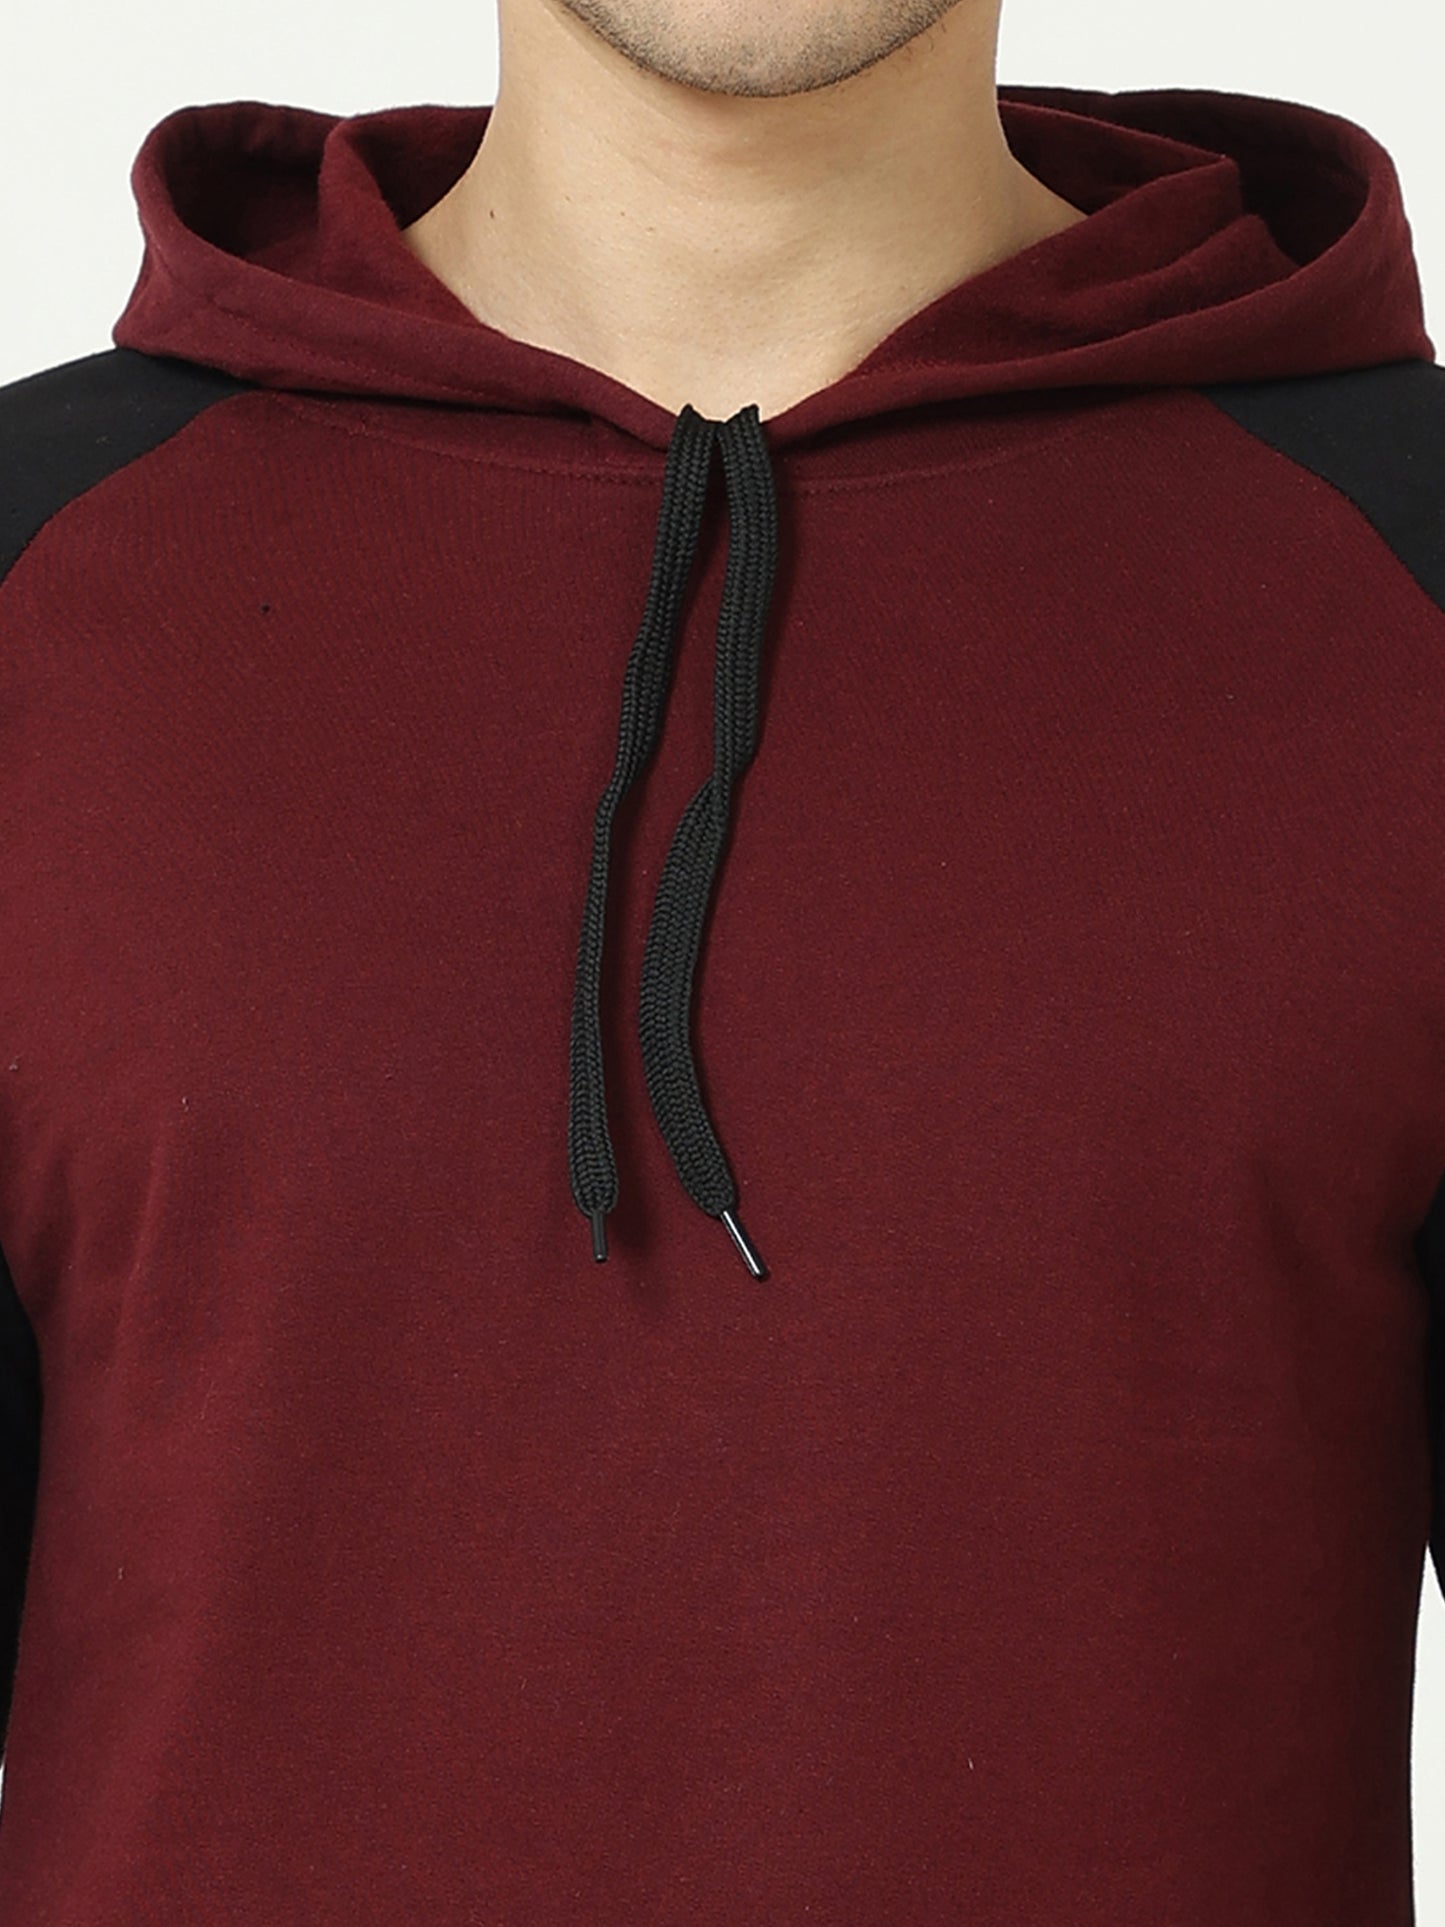 Men's Cotton Full Sleeve Color Block Maroonblack Color Hoodies/Sweatshirts